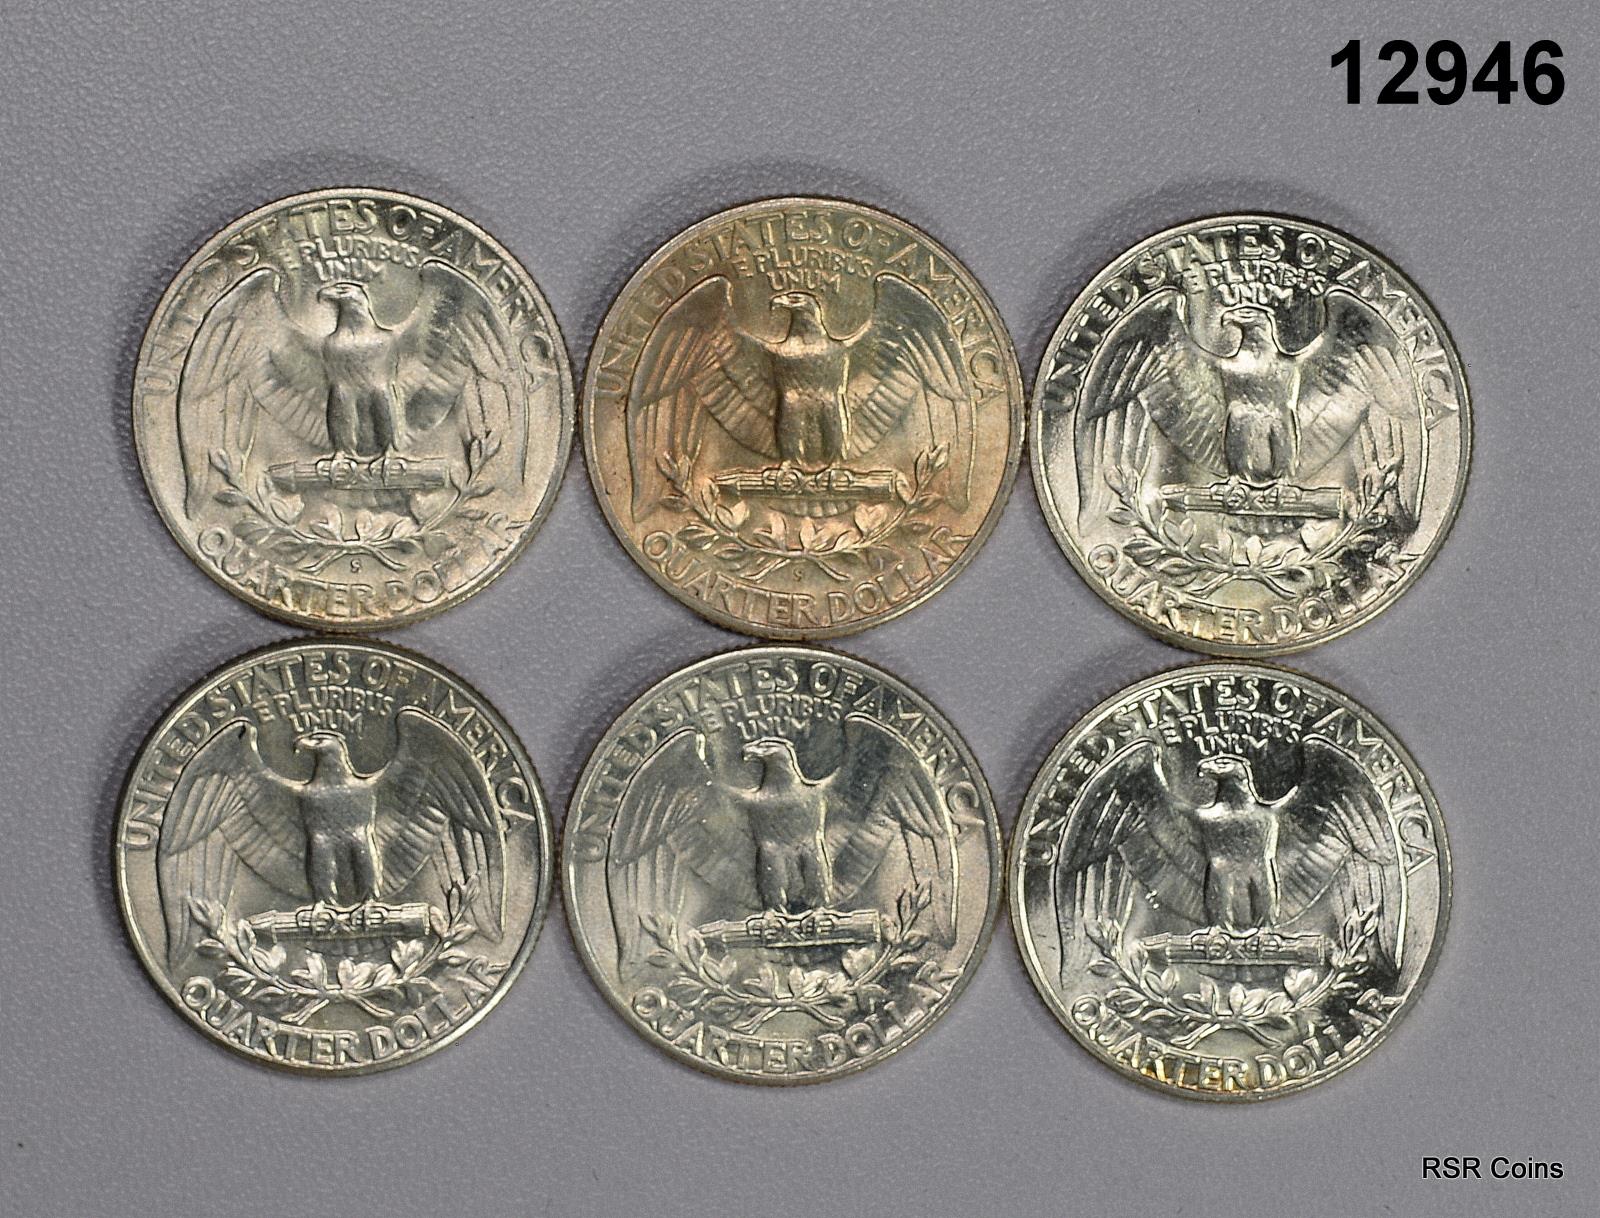 6 COIN LOT CHOICE TO GEM BU WASHINGTON QUARTERS 1952S, 48S, 49, 45, 47,44 #12946